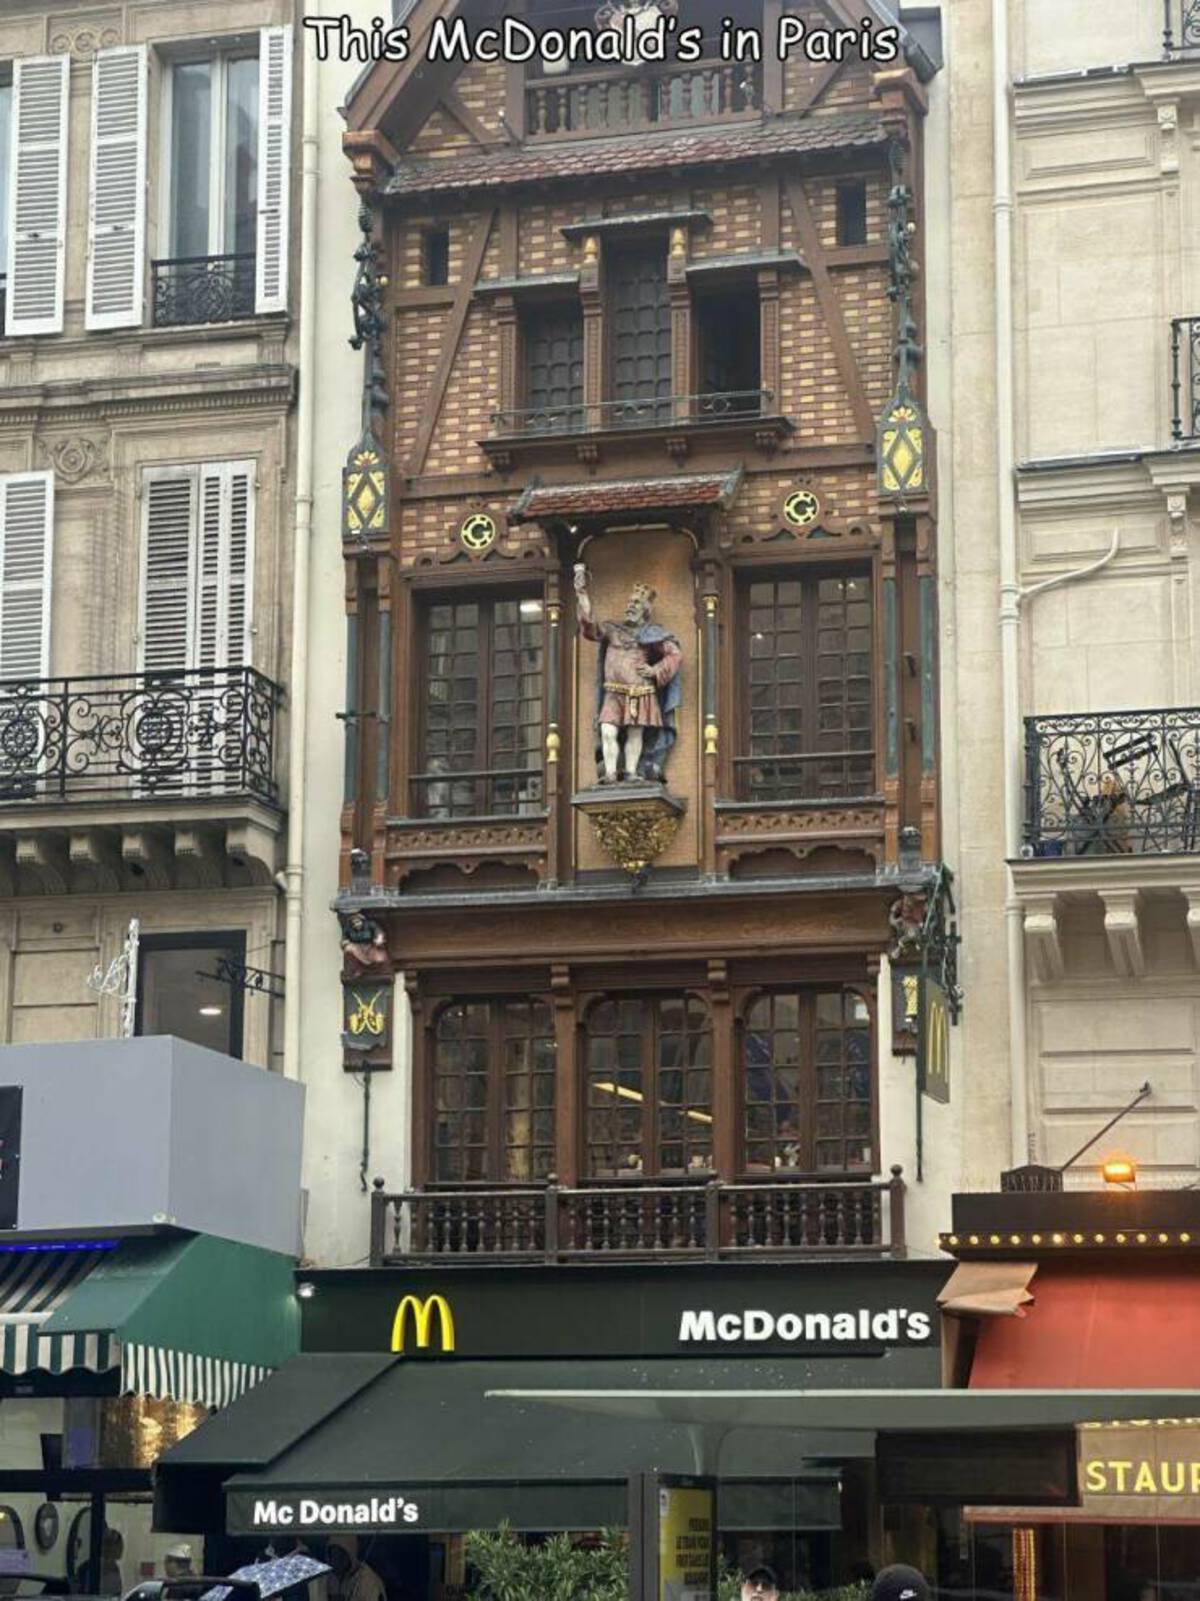 mcdonald's - This McDonald's in Paris Llis Full Mc Donald's 211 M 4 McDonald's Wher Jamaa 20 Staur